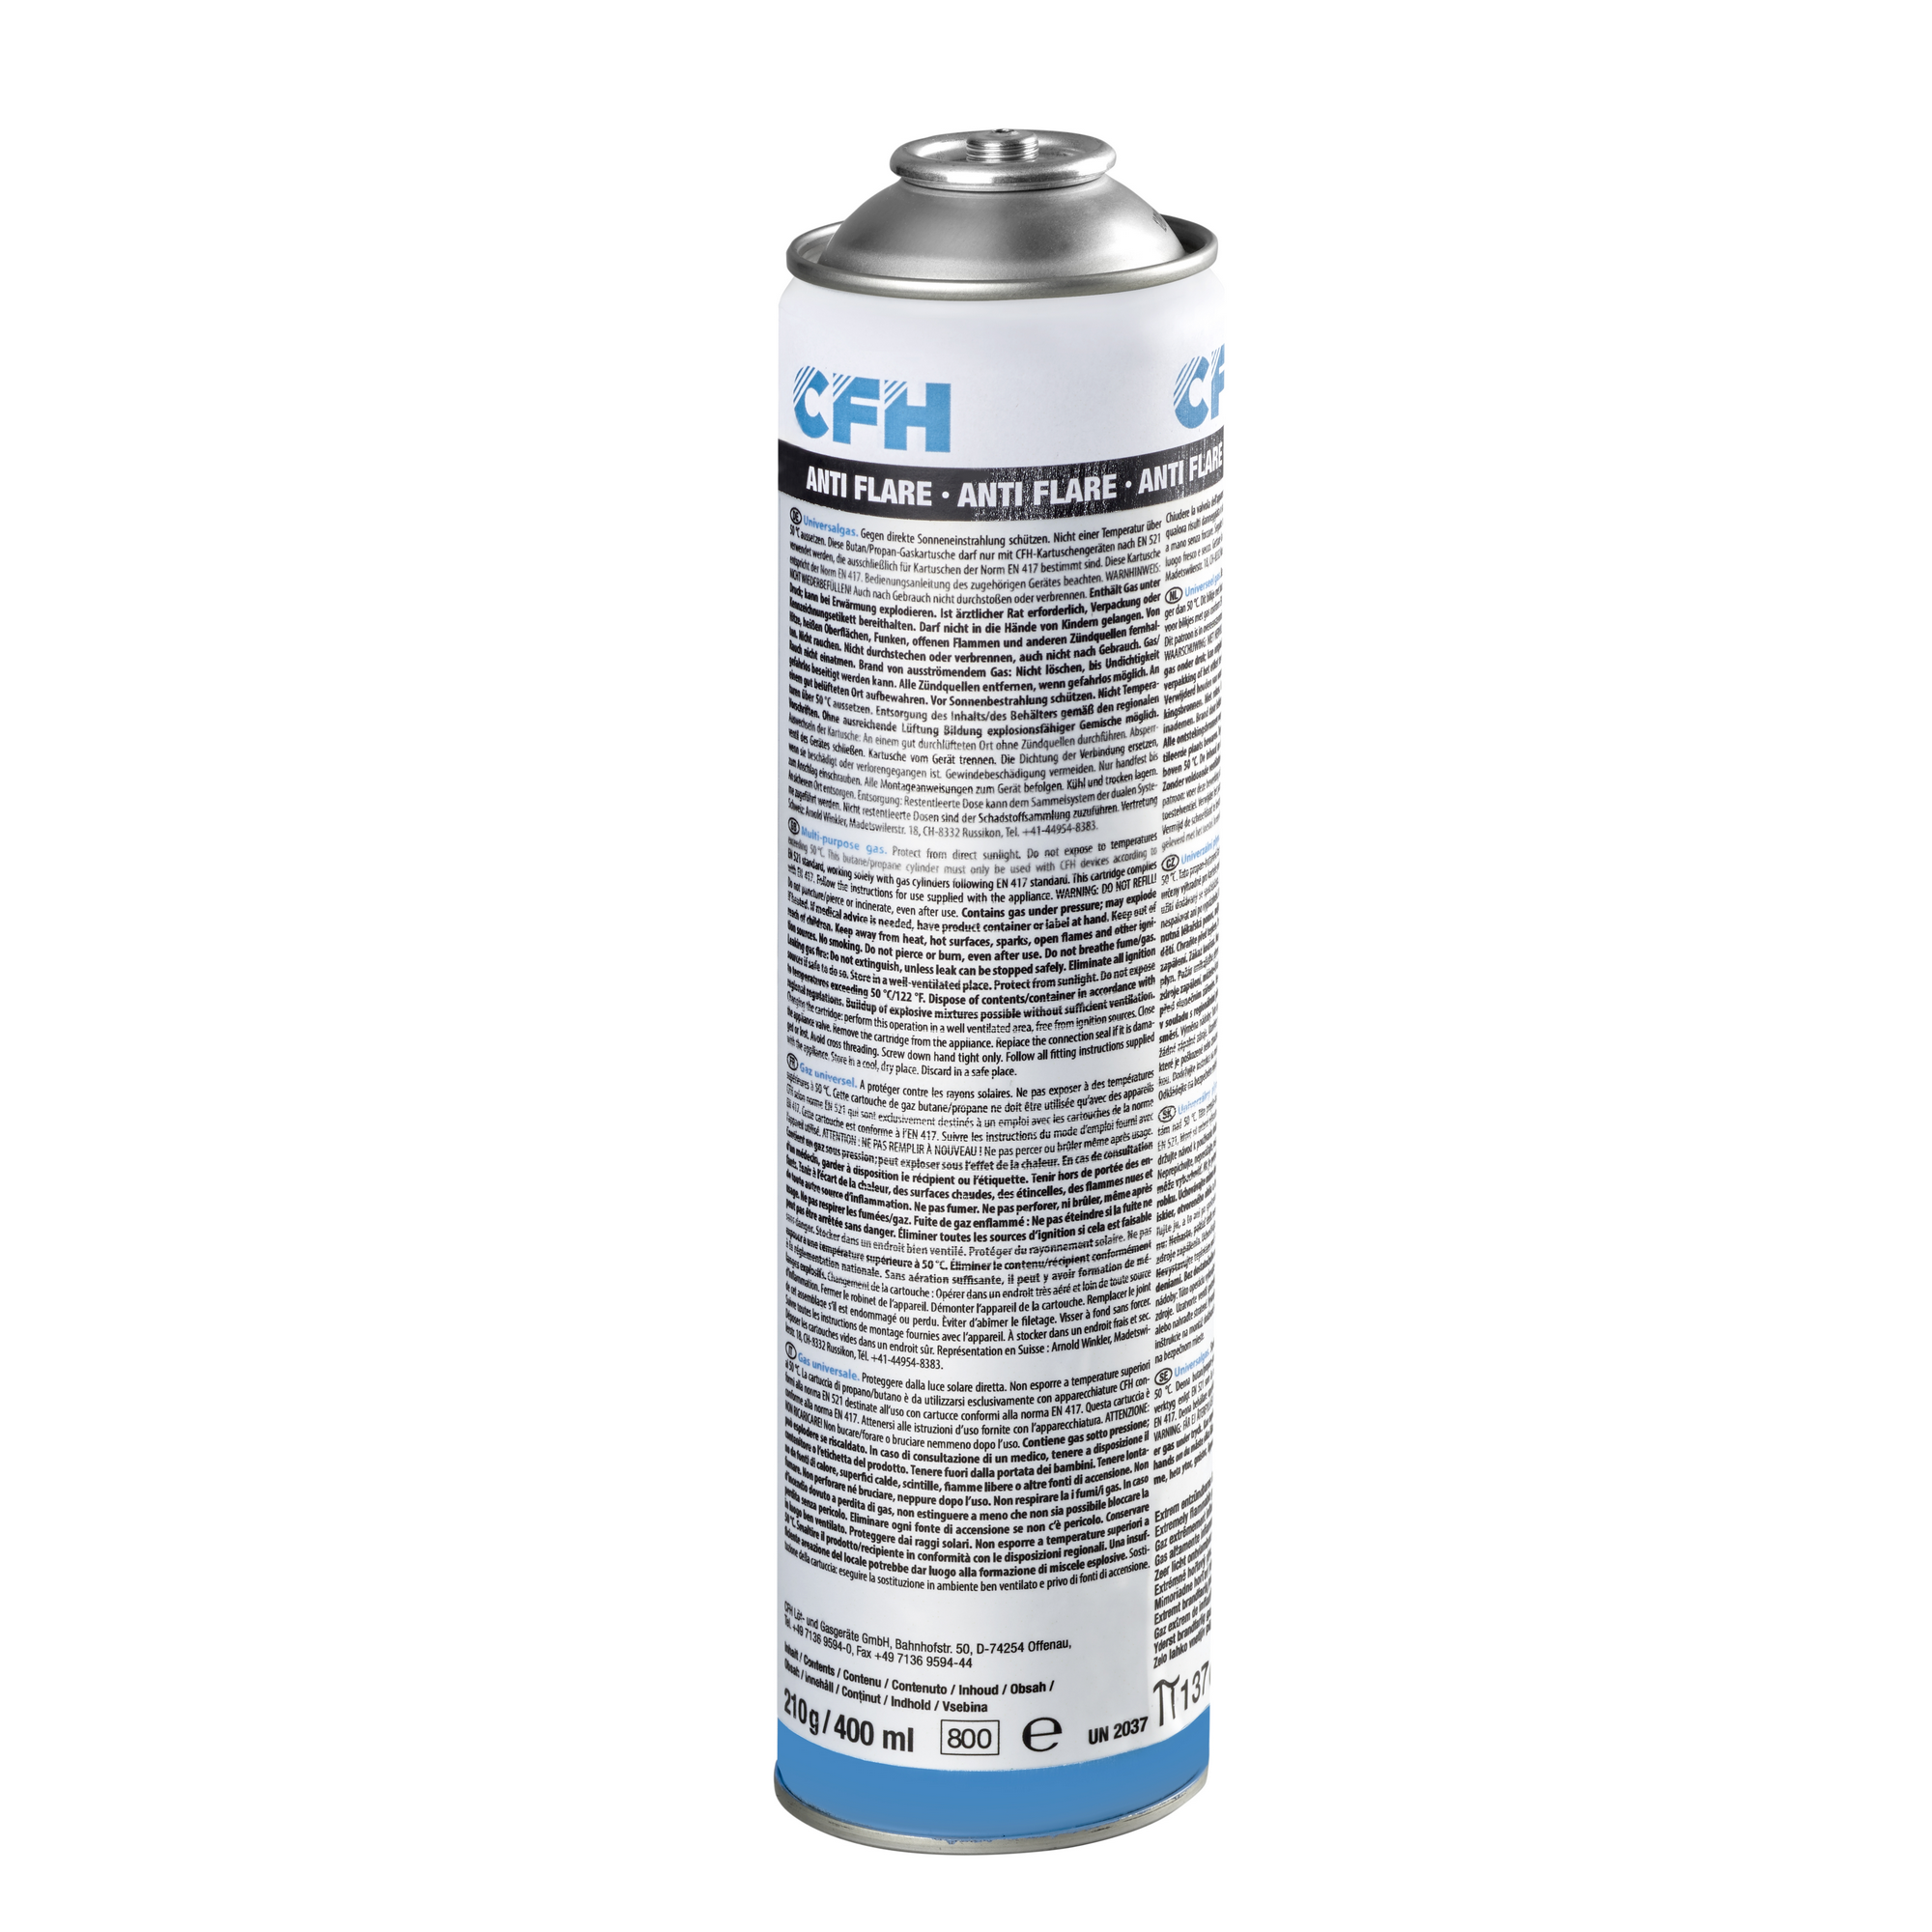 Universaldruckgasdose Anti Flare 400 ml + product picture